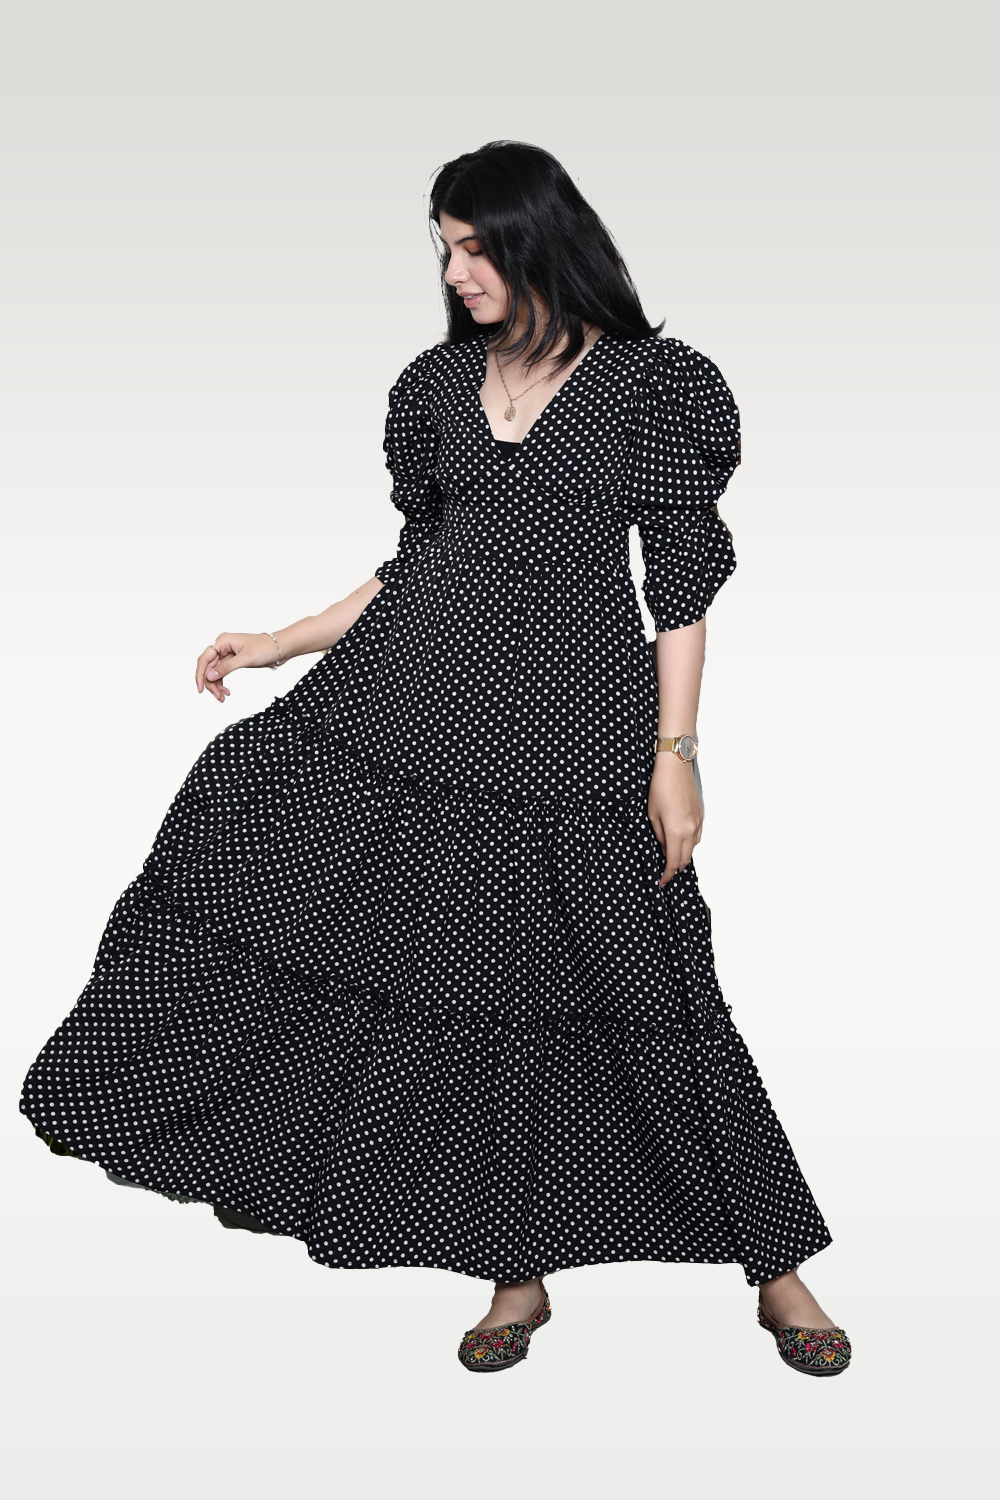 Alish Black and White Polka Dot Long Gown RMQ